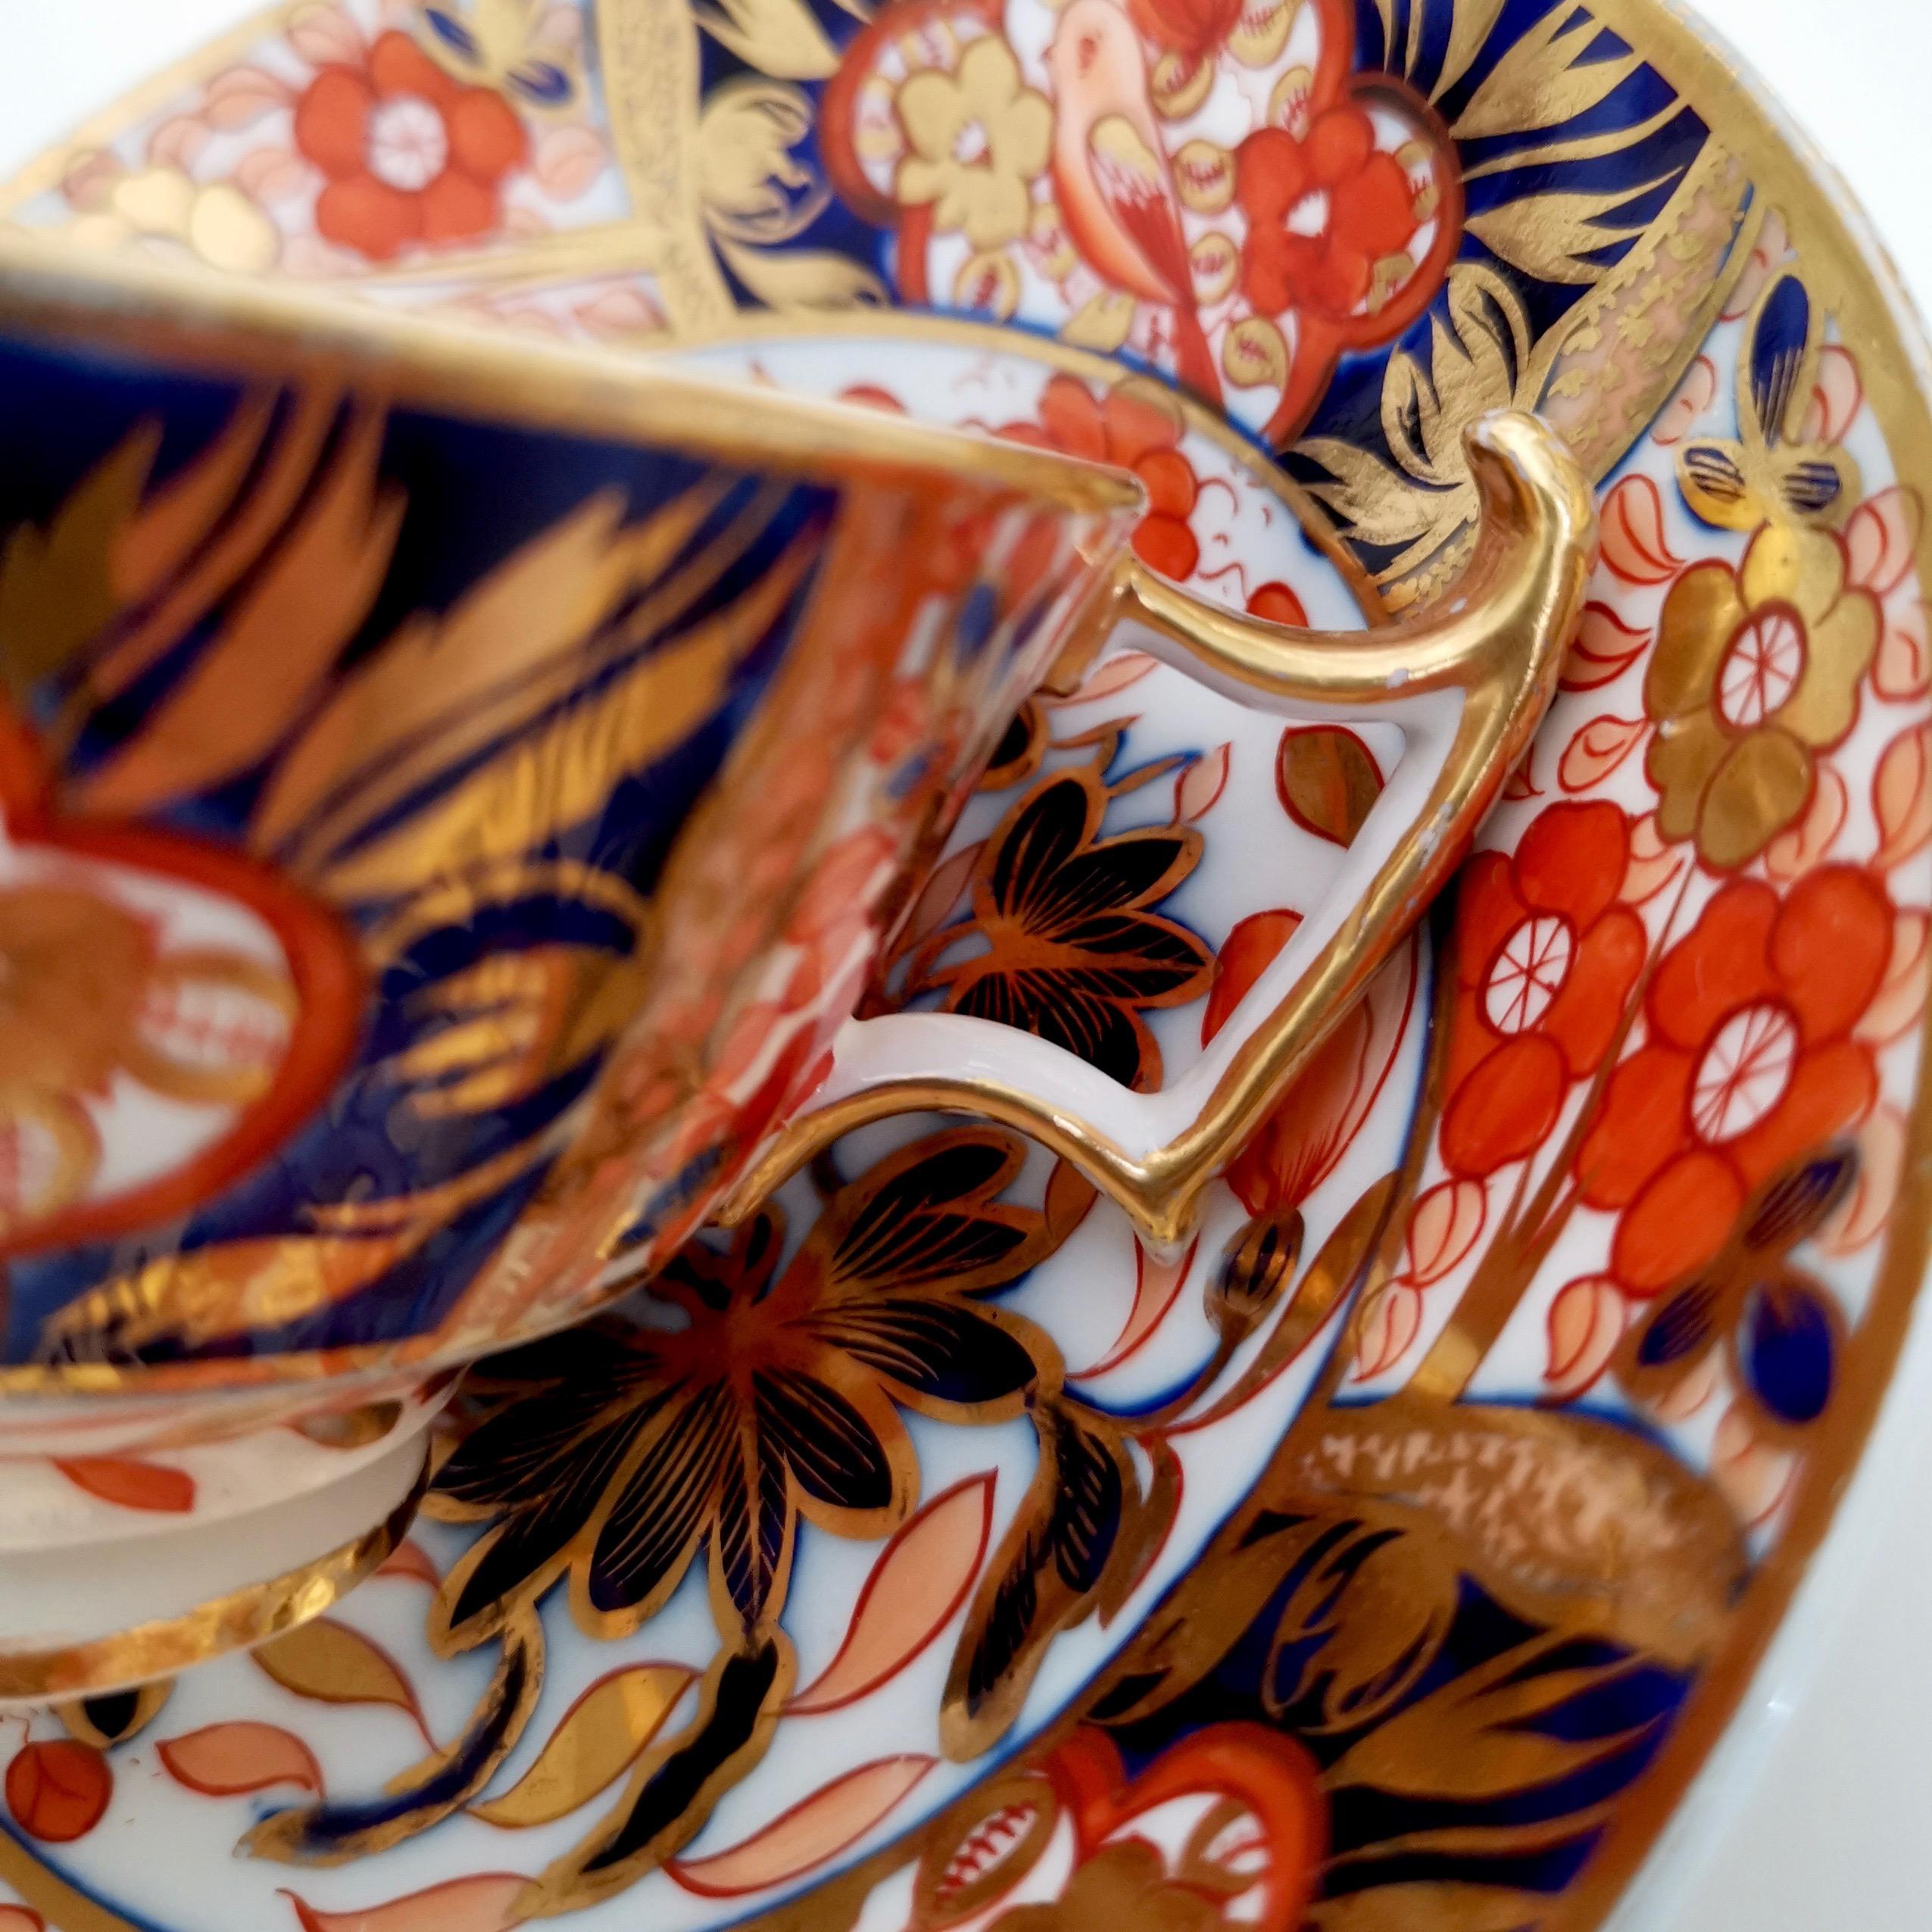 John Rose Coalport Porcelain Teacup, Red Japan Imari with Birds, Regency, 1815 2